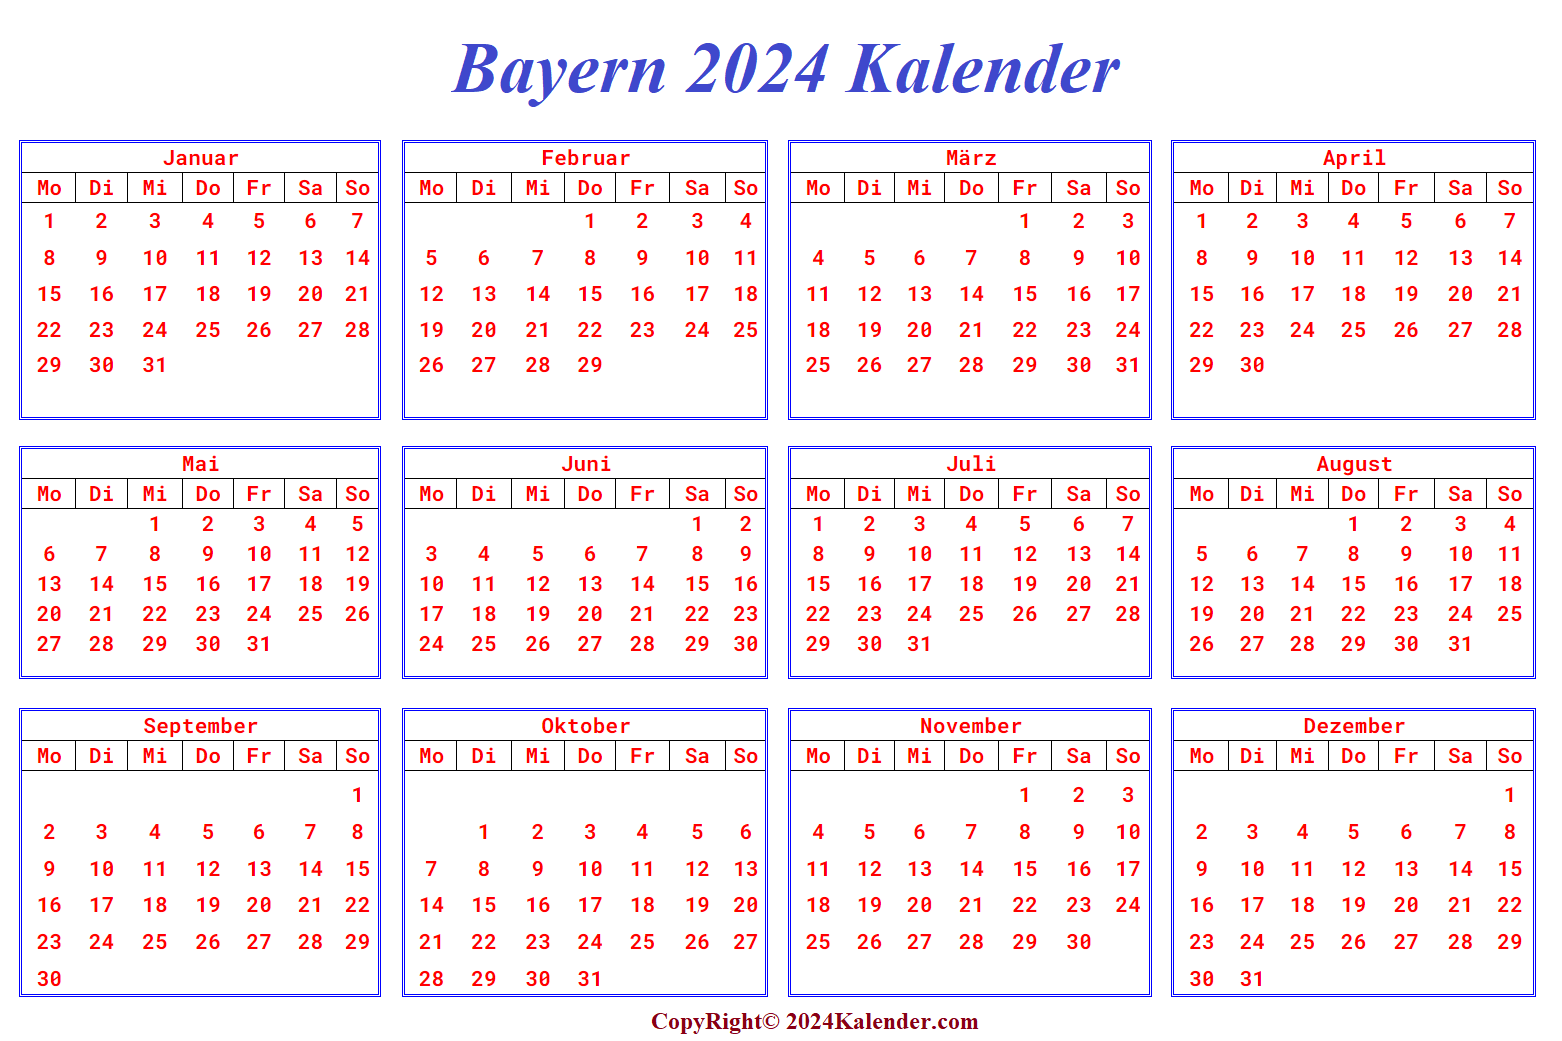 Bayern 2024 Kalender